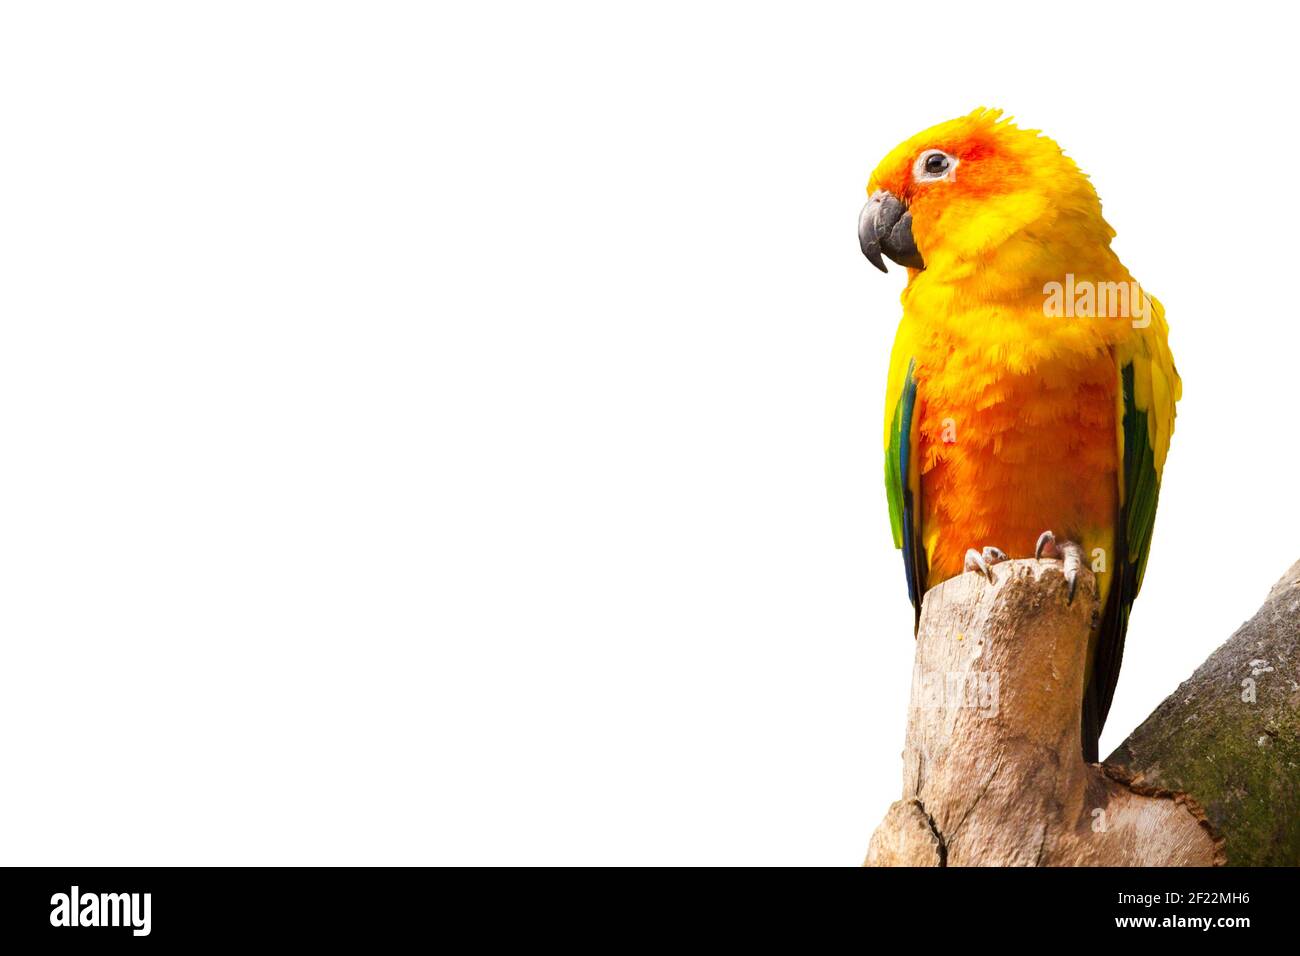 Sun parakeet, Aratinga solstitialis parrot bird on white background with copyspace Stock Photo